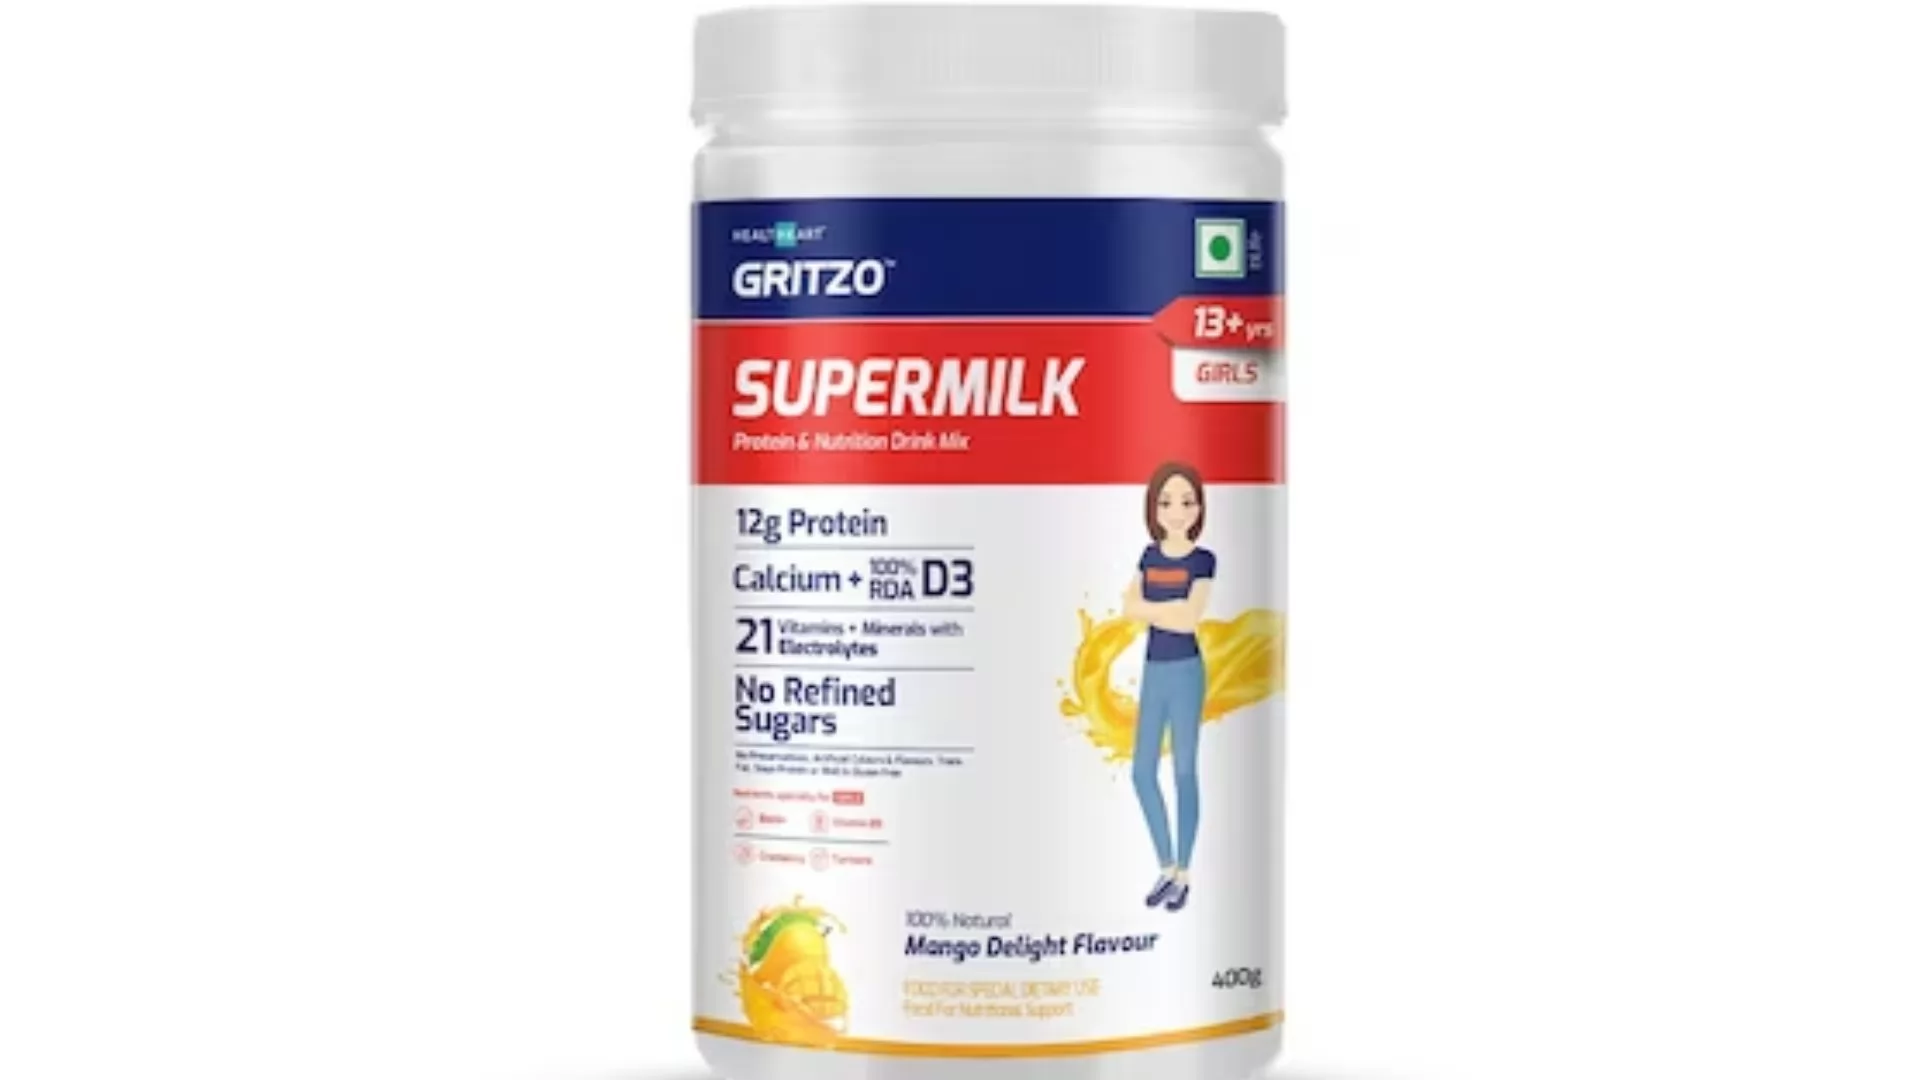 Gritzo SuperMilk 13+y Health Drink & Kids Nutrition